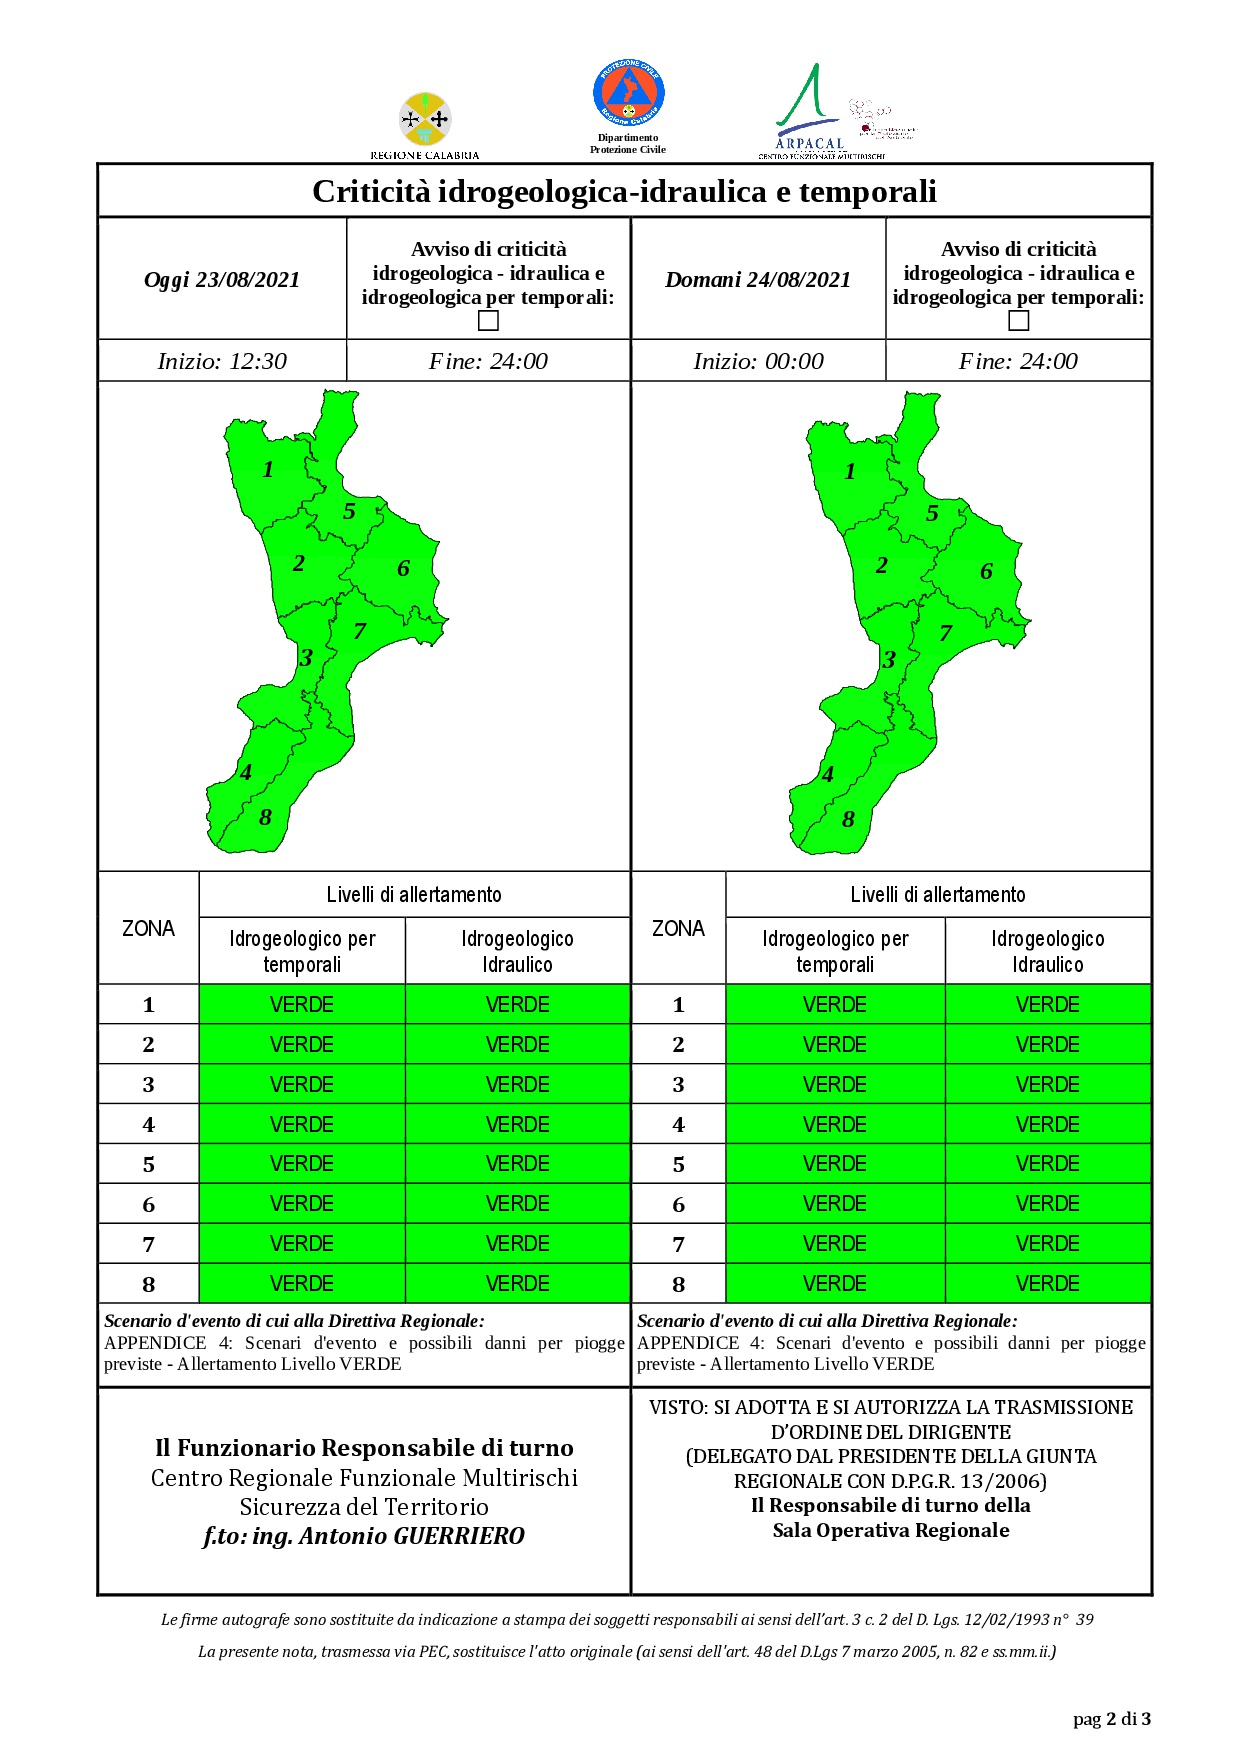 Criticità idrogeologica-idraulica e temporali in Calabria 23-08-2021